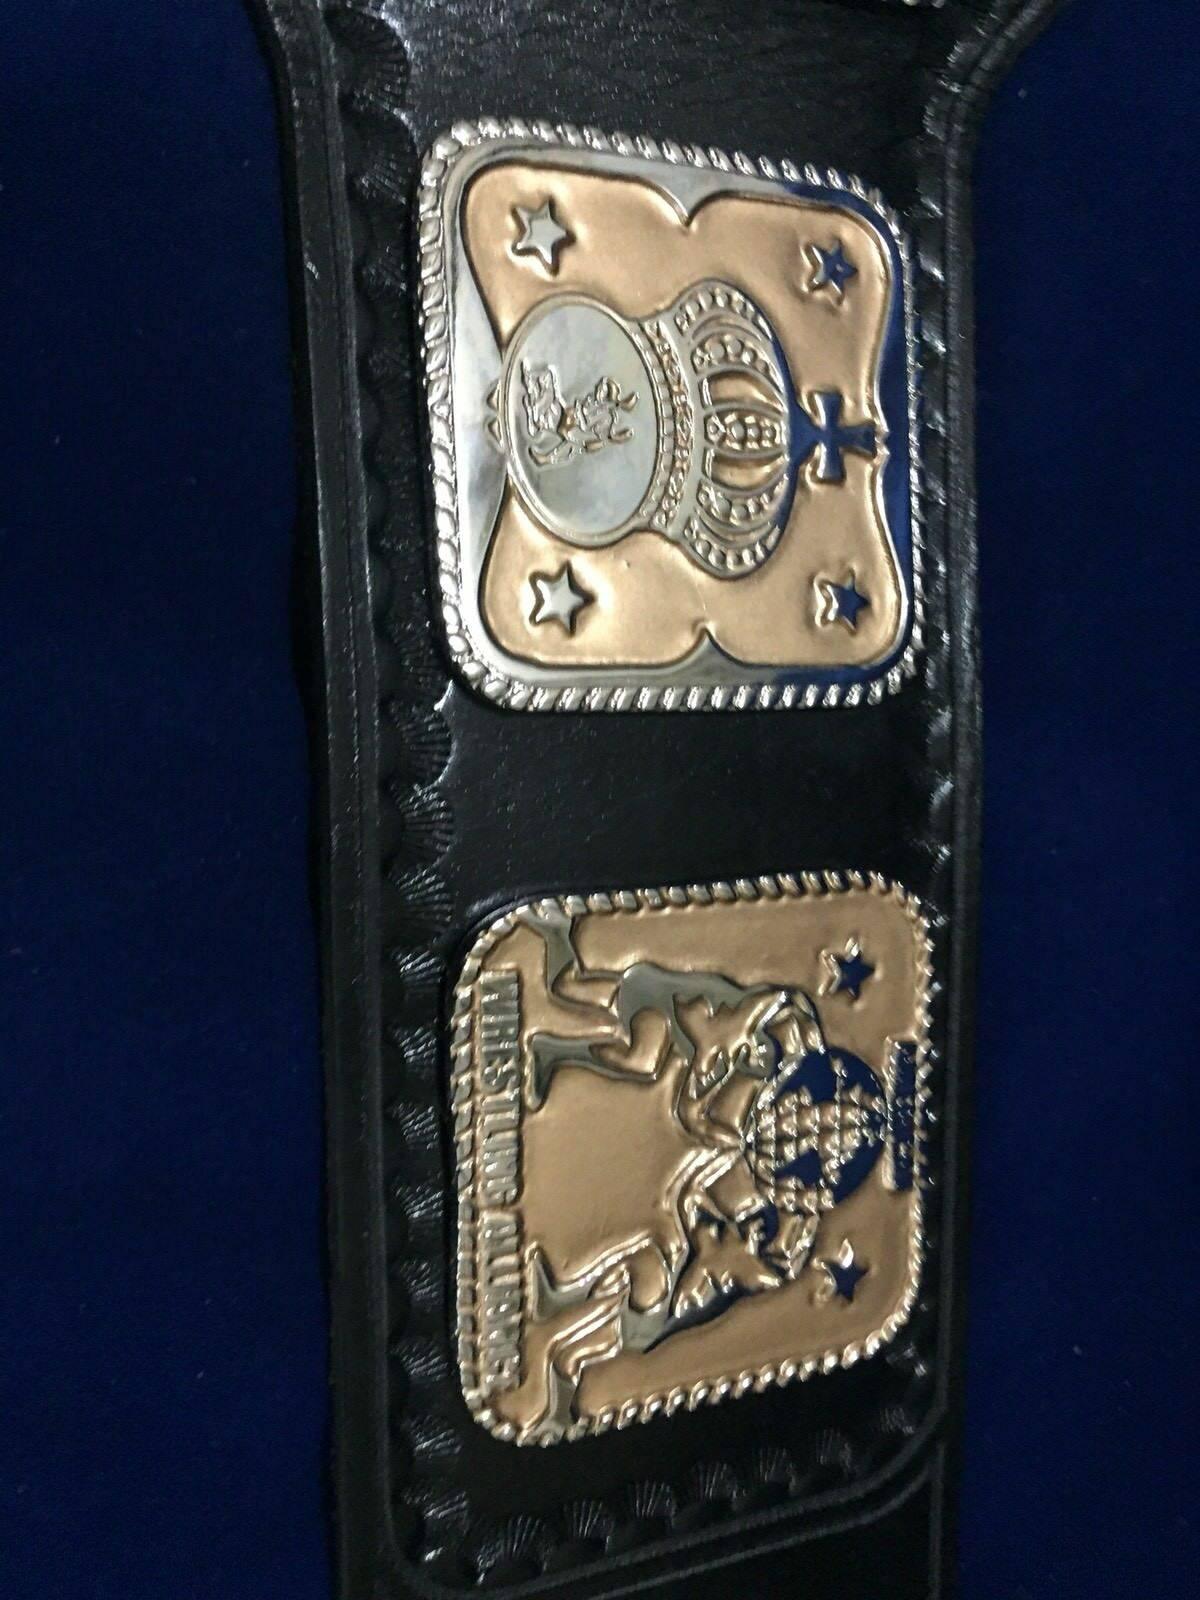 AWA WORLD TAG TEAM 24K GOLD Championship Belt - Zees Belts